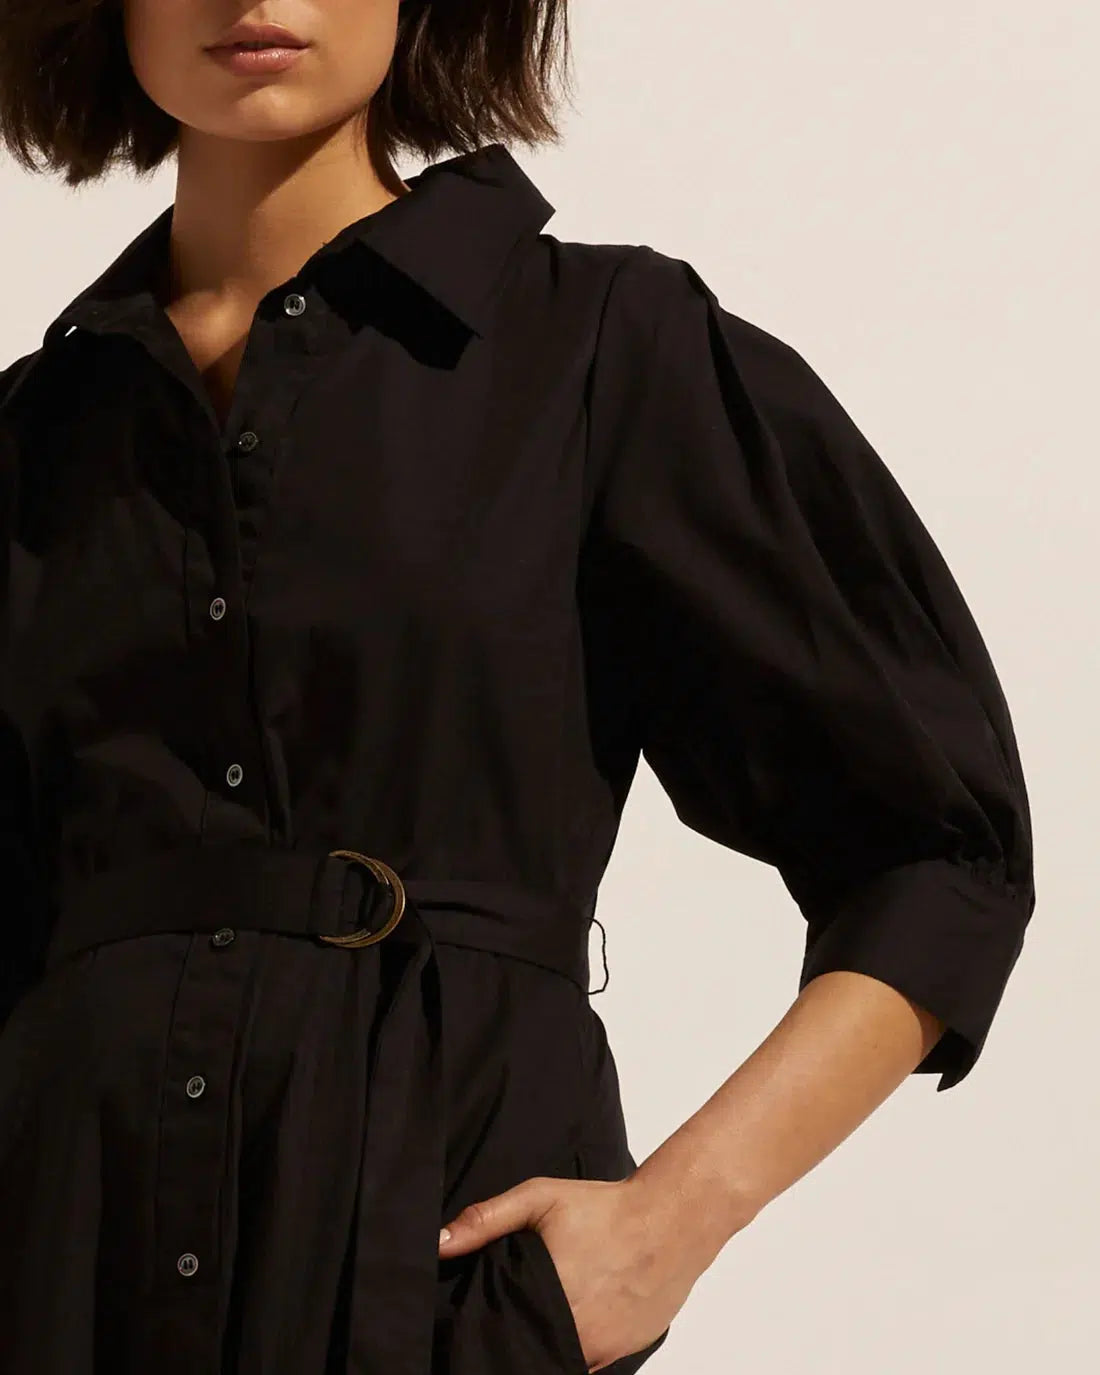 Favour Dress - Black-Zoe Kratzmann-Lima & Co